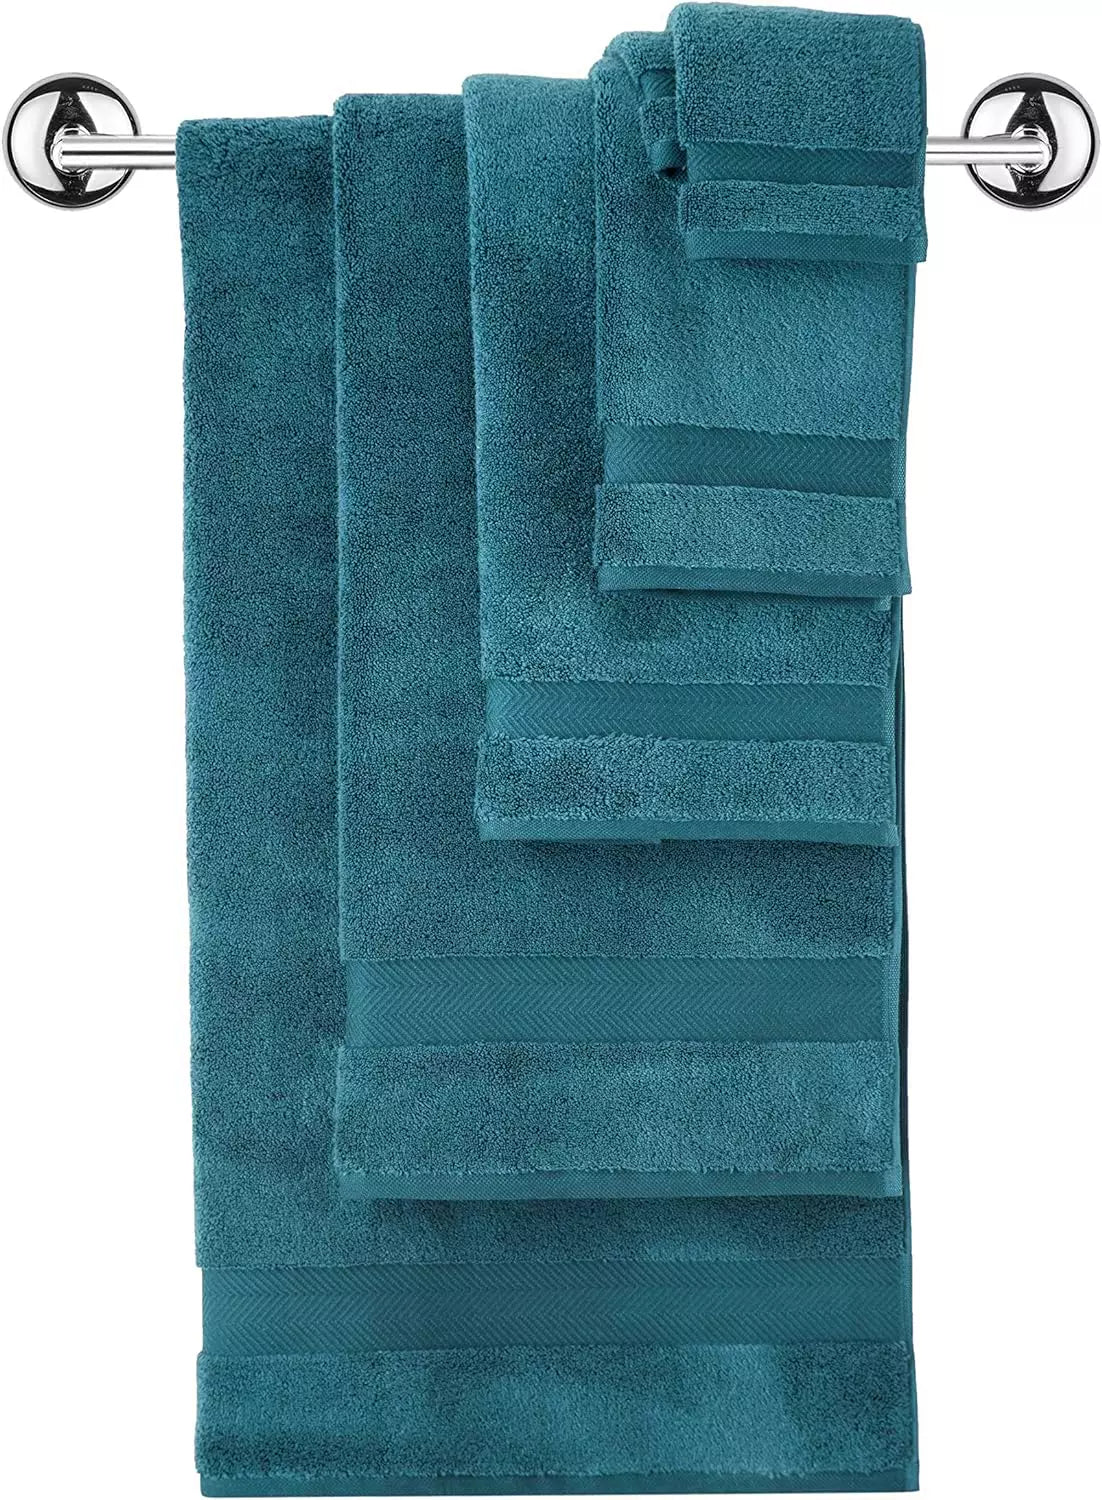 Super Soft 6 Piece 800GSM Towel Bale -2 Face Cloth 2 Hand Towels, 2 Bath Towels